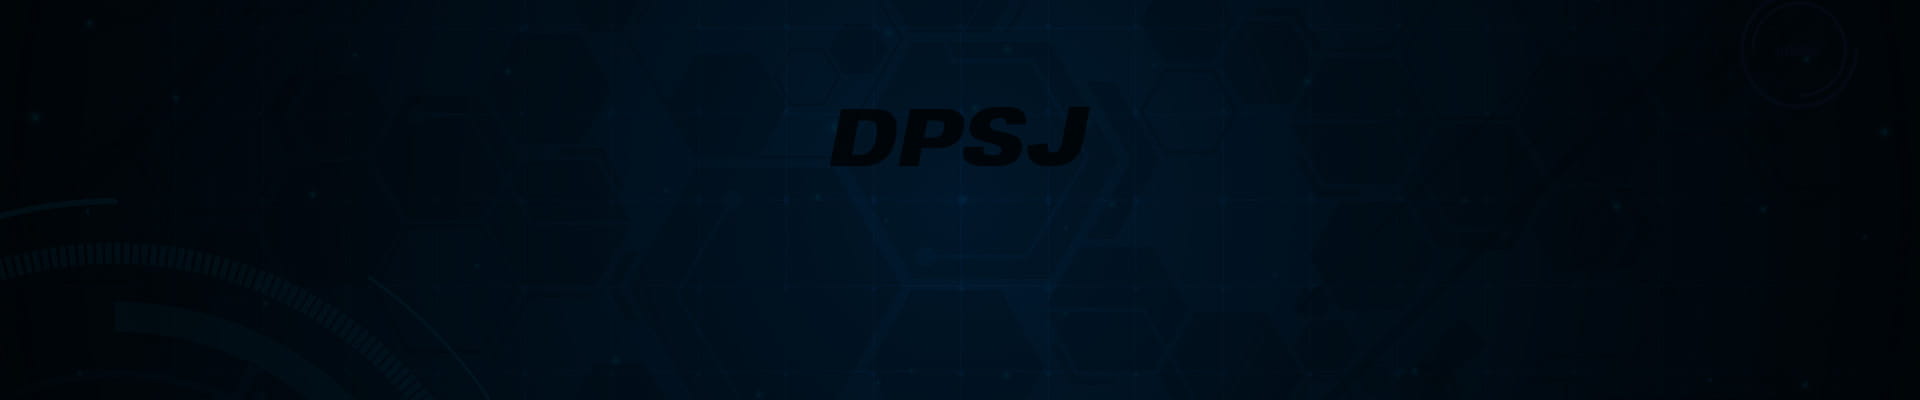 DPSJ と Telestream 社、Vidchecker 製品の販売代理店契約を締結し、より広範なファイル QC ニーズへ提供可能に